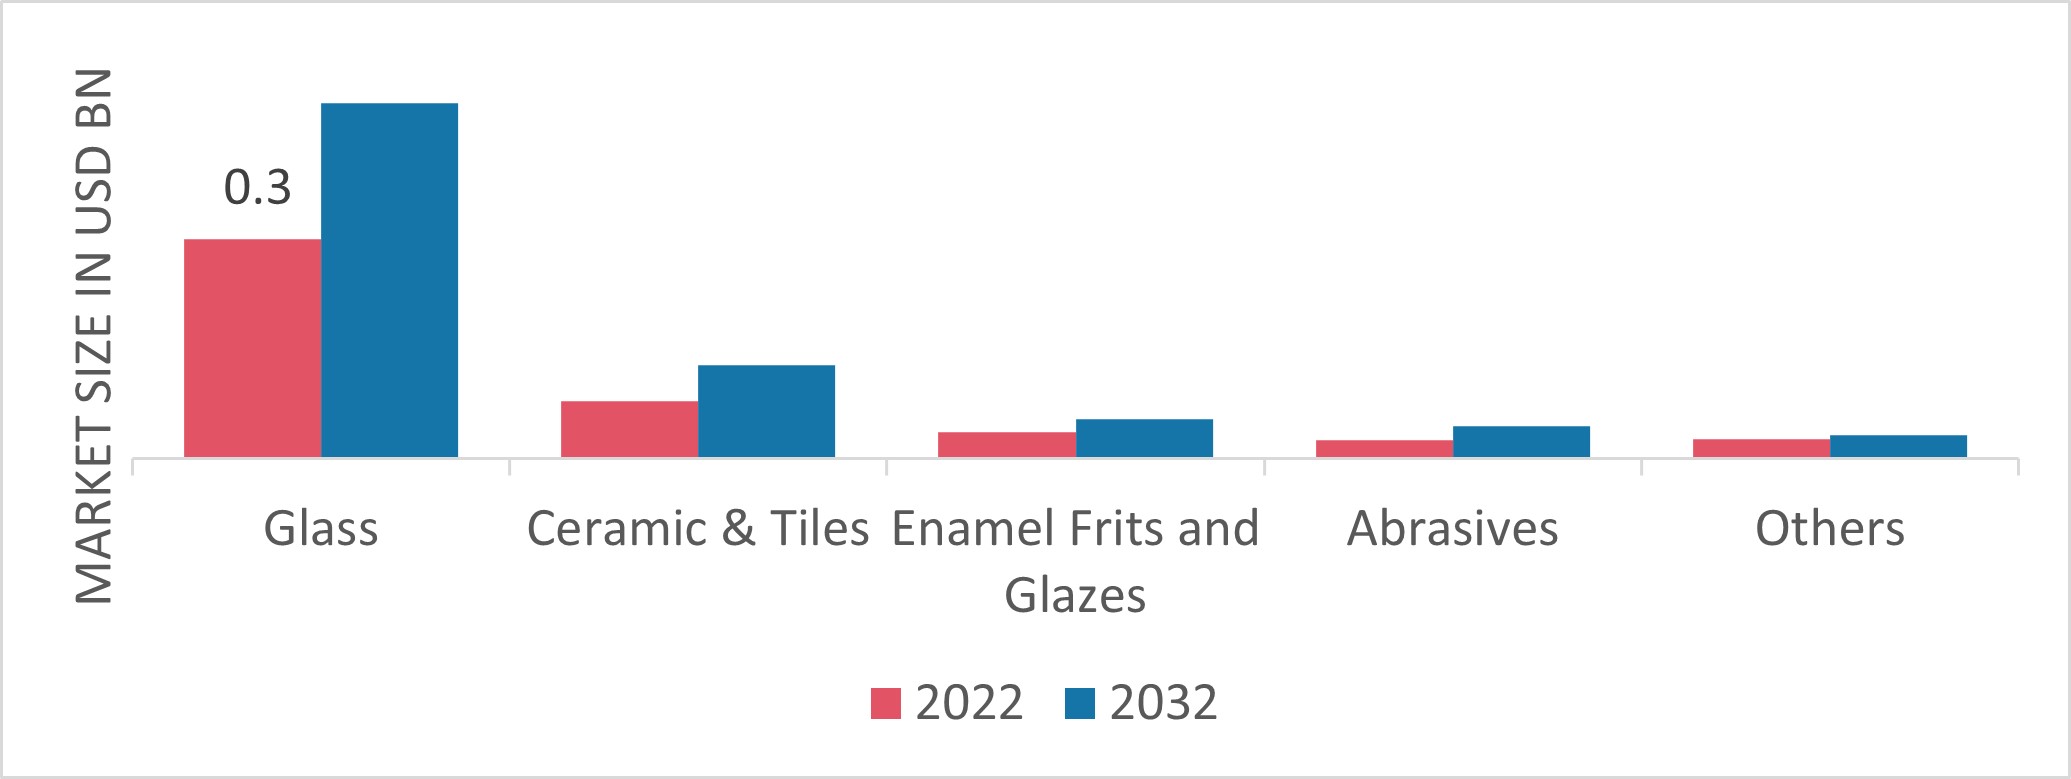 Potassium Feldspars Market, by Application Industry, 2022 & 2032